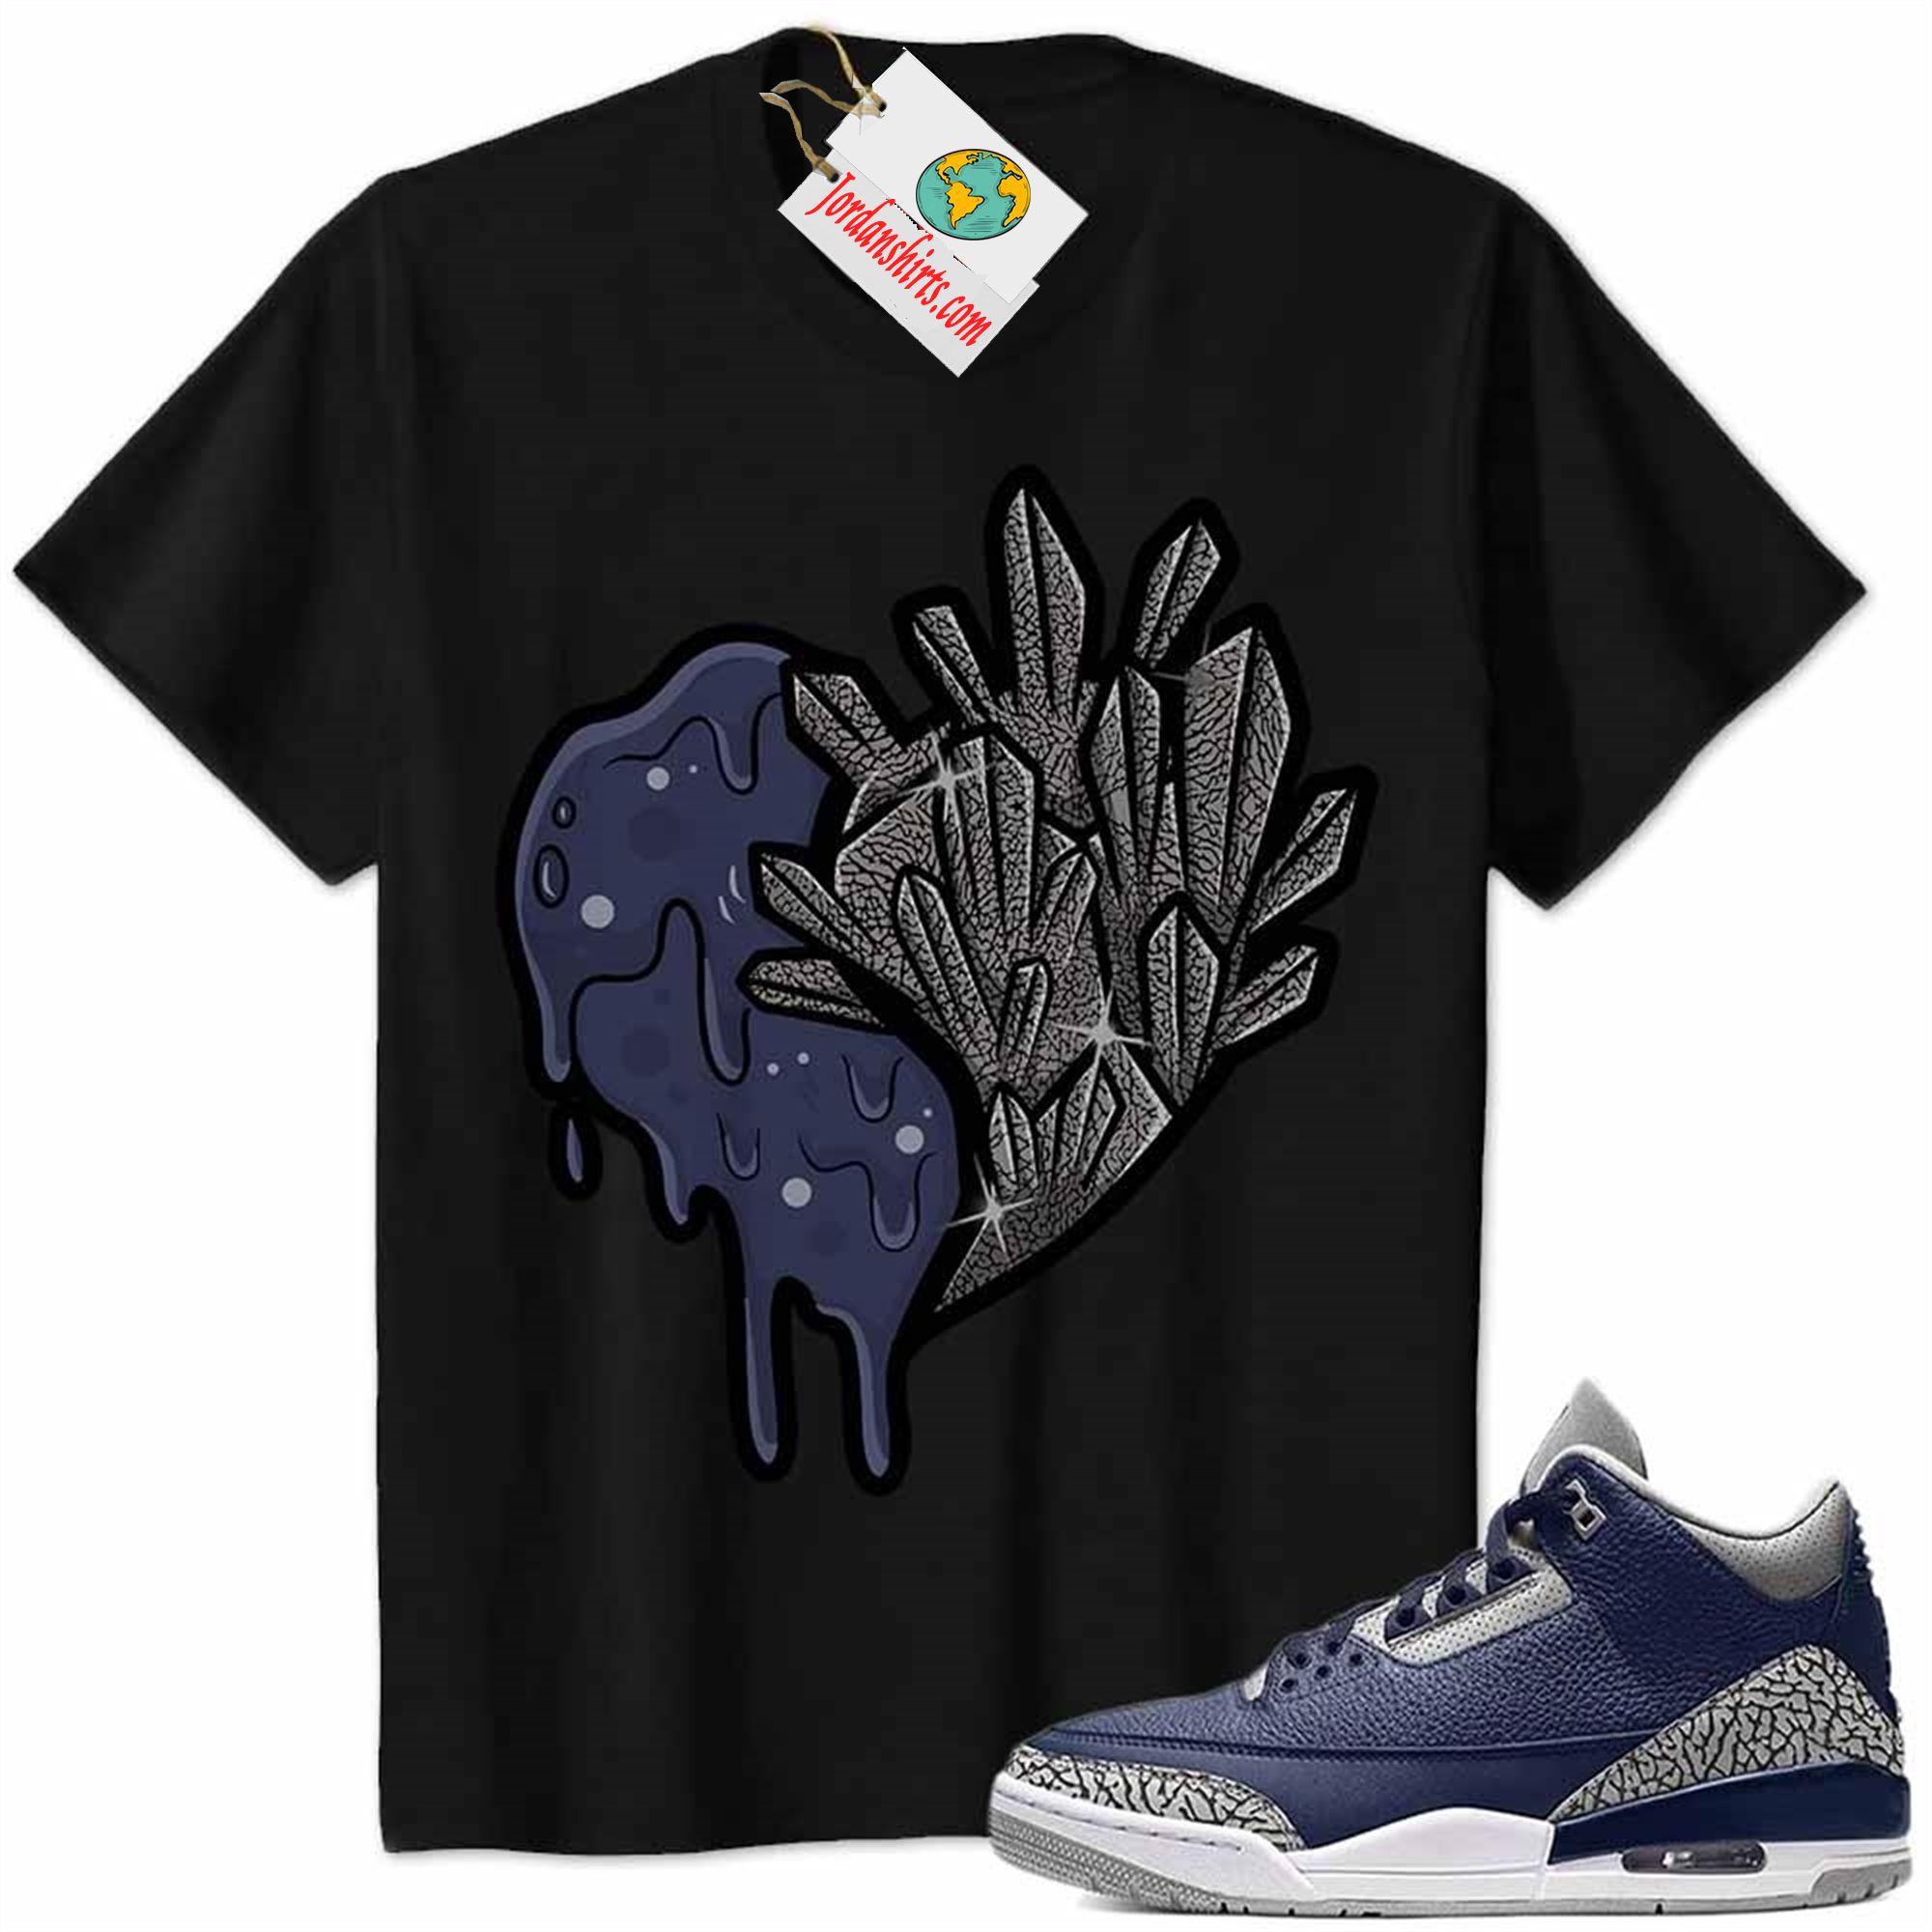 Jordan 3 Shirt, Crystal And Melt Heart Black Air Jordan 3 Georgetown Midnight Navy 3s Full Size Up To 5xl